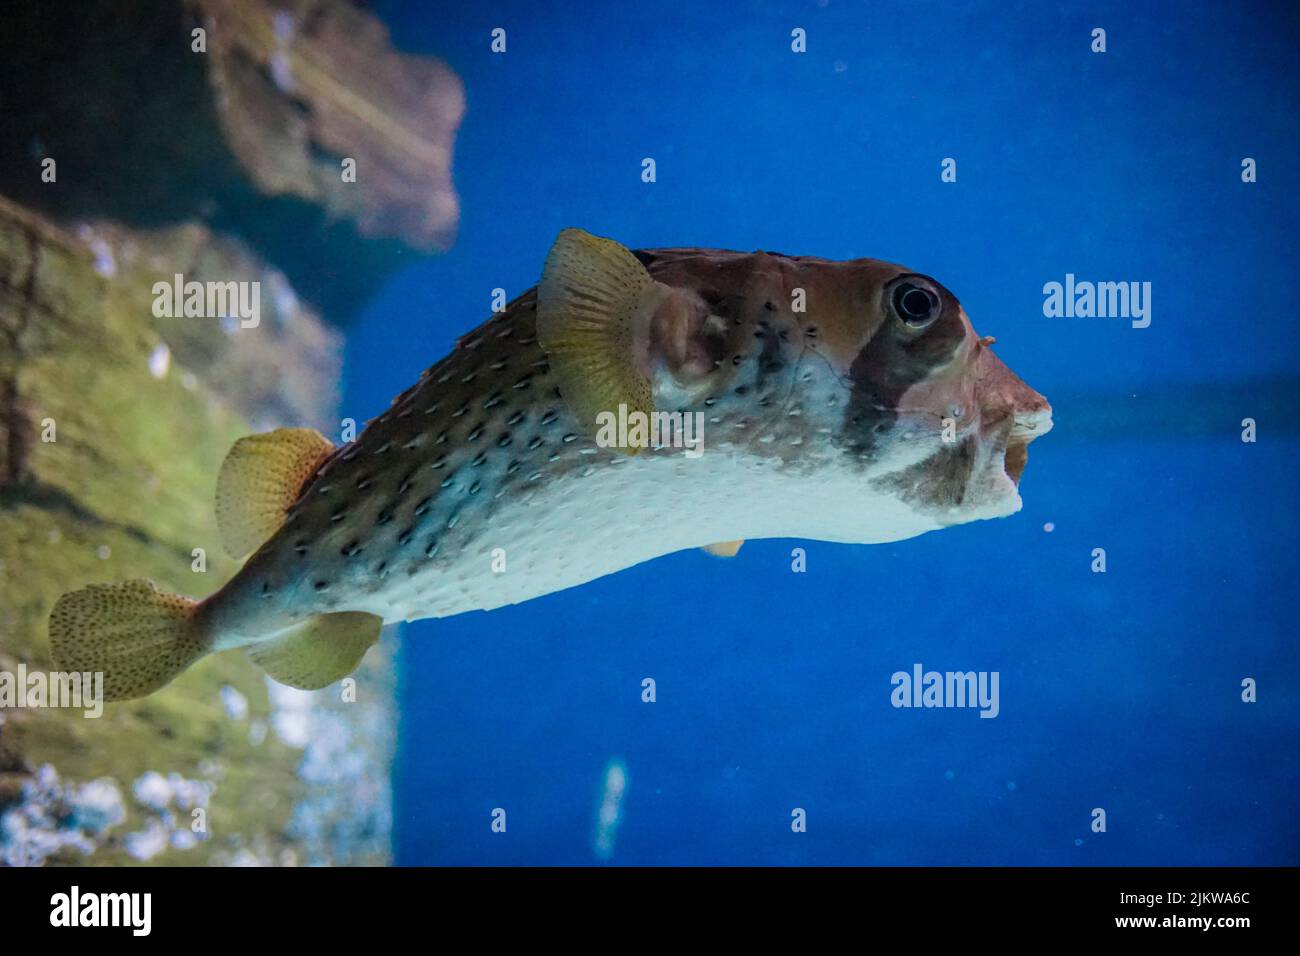 A closeup of a Diodon hystrix fish in the aquarium Stock Photo